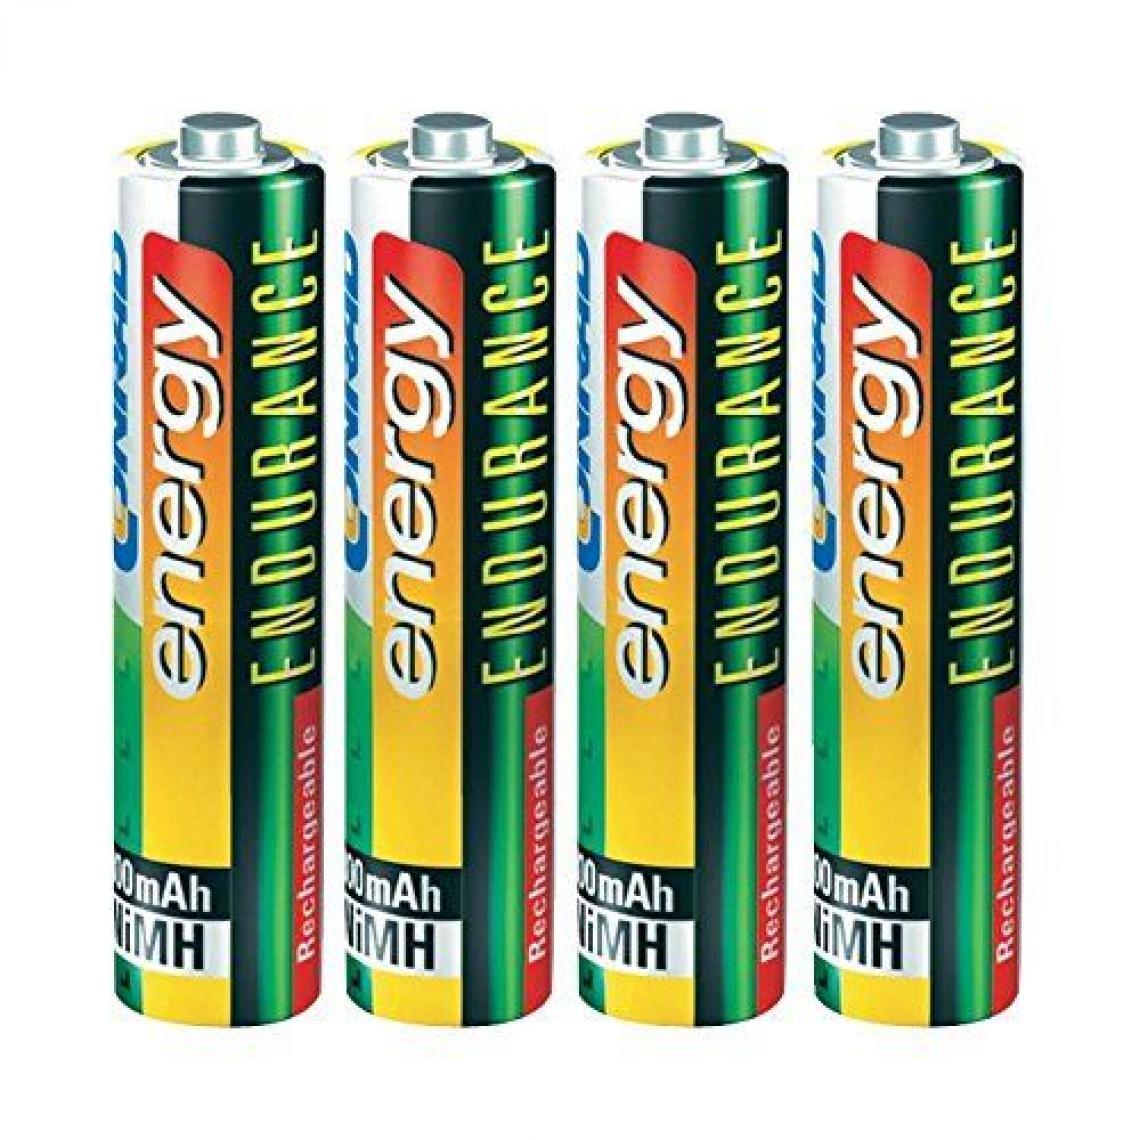 Inconnu - Conrad 251010 Hybride Nickel Metal 800mAh 1.2V batterie rechargeable - batteries rechargeables (800 mAh, Hybride Nickel Metal, AAA, 1,2 V, 4 pièce(s)) - Piles standard